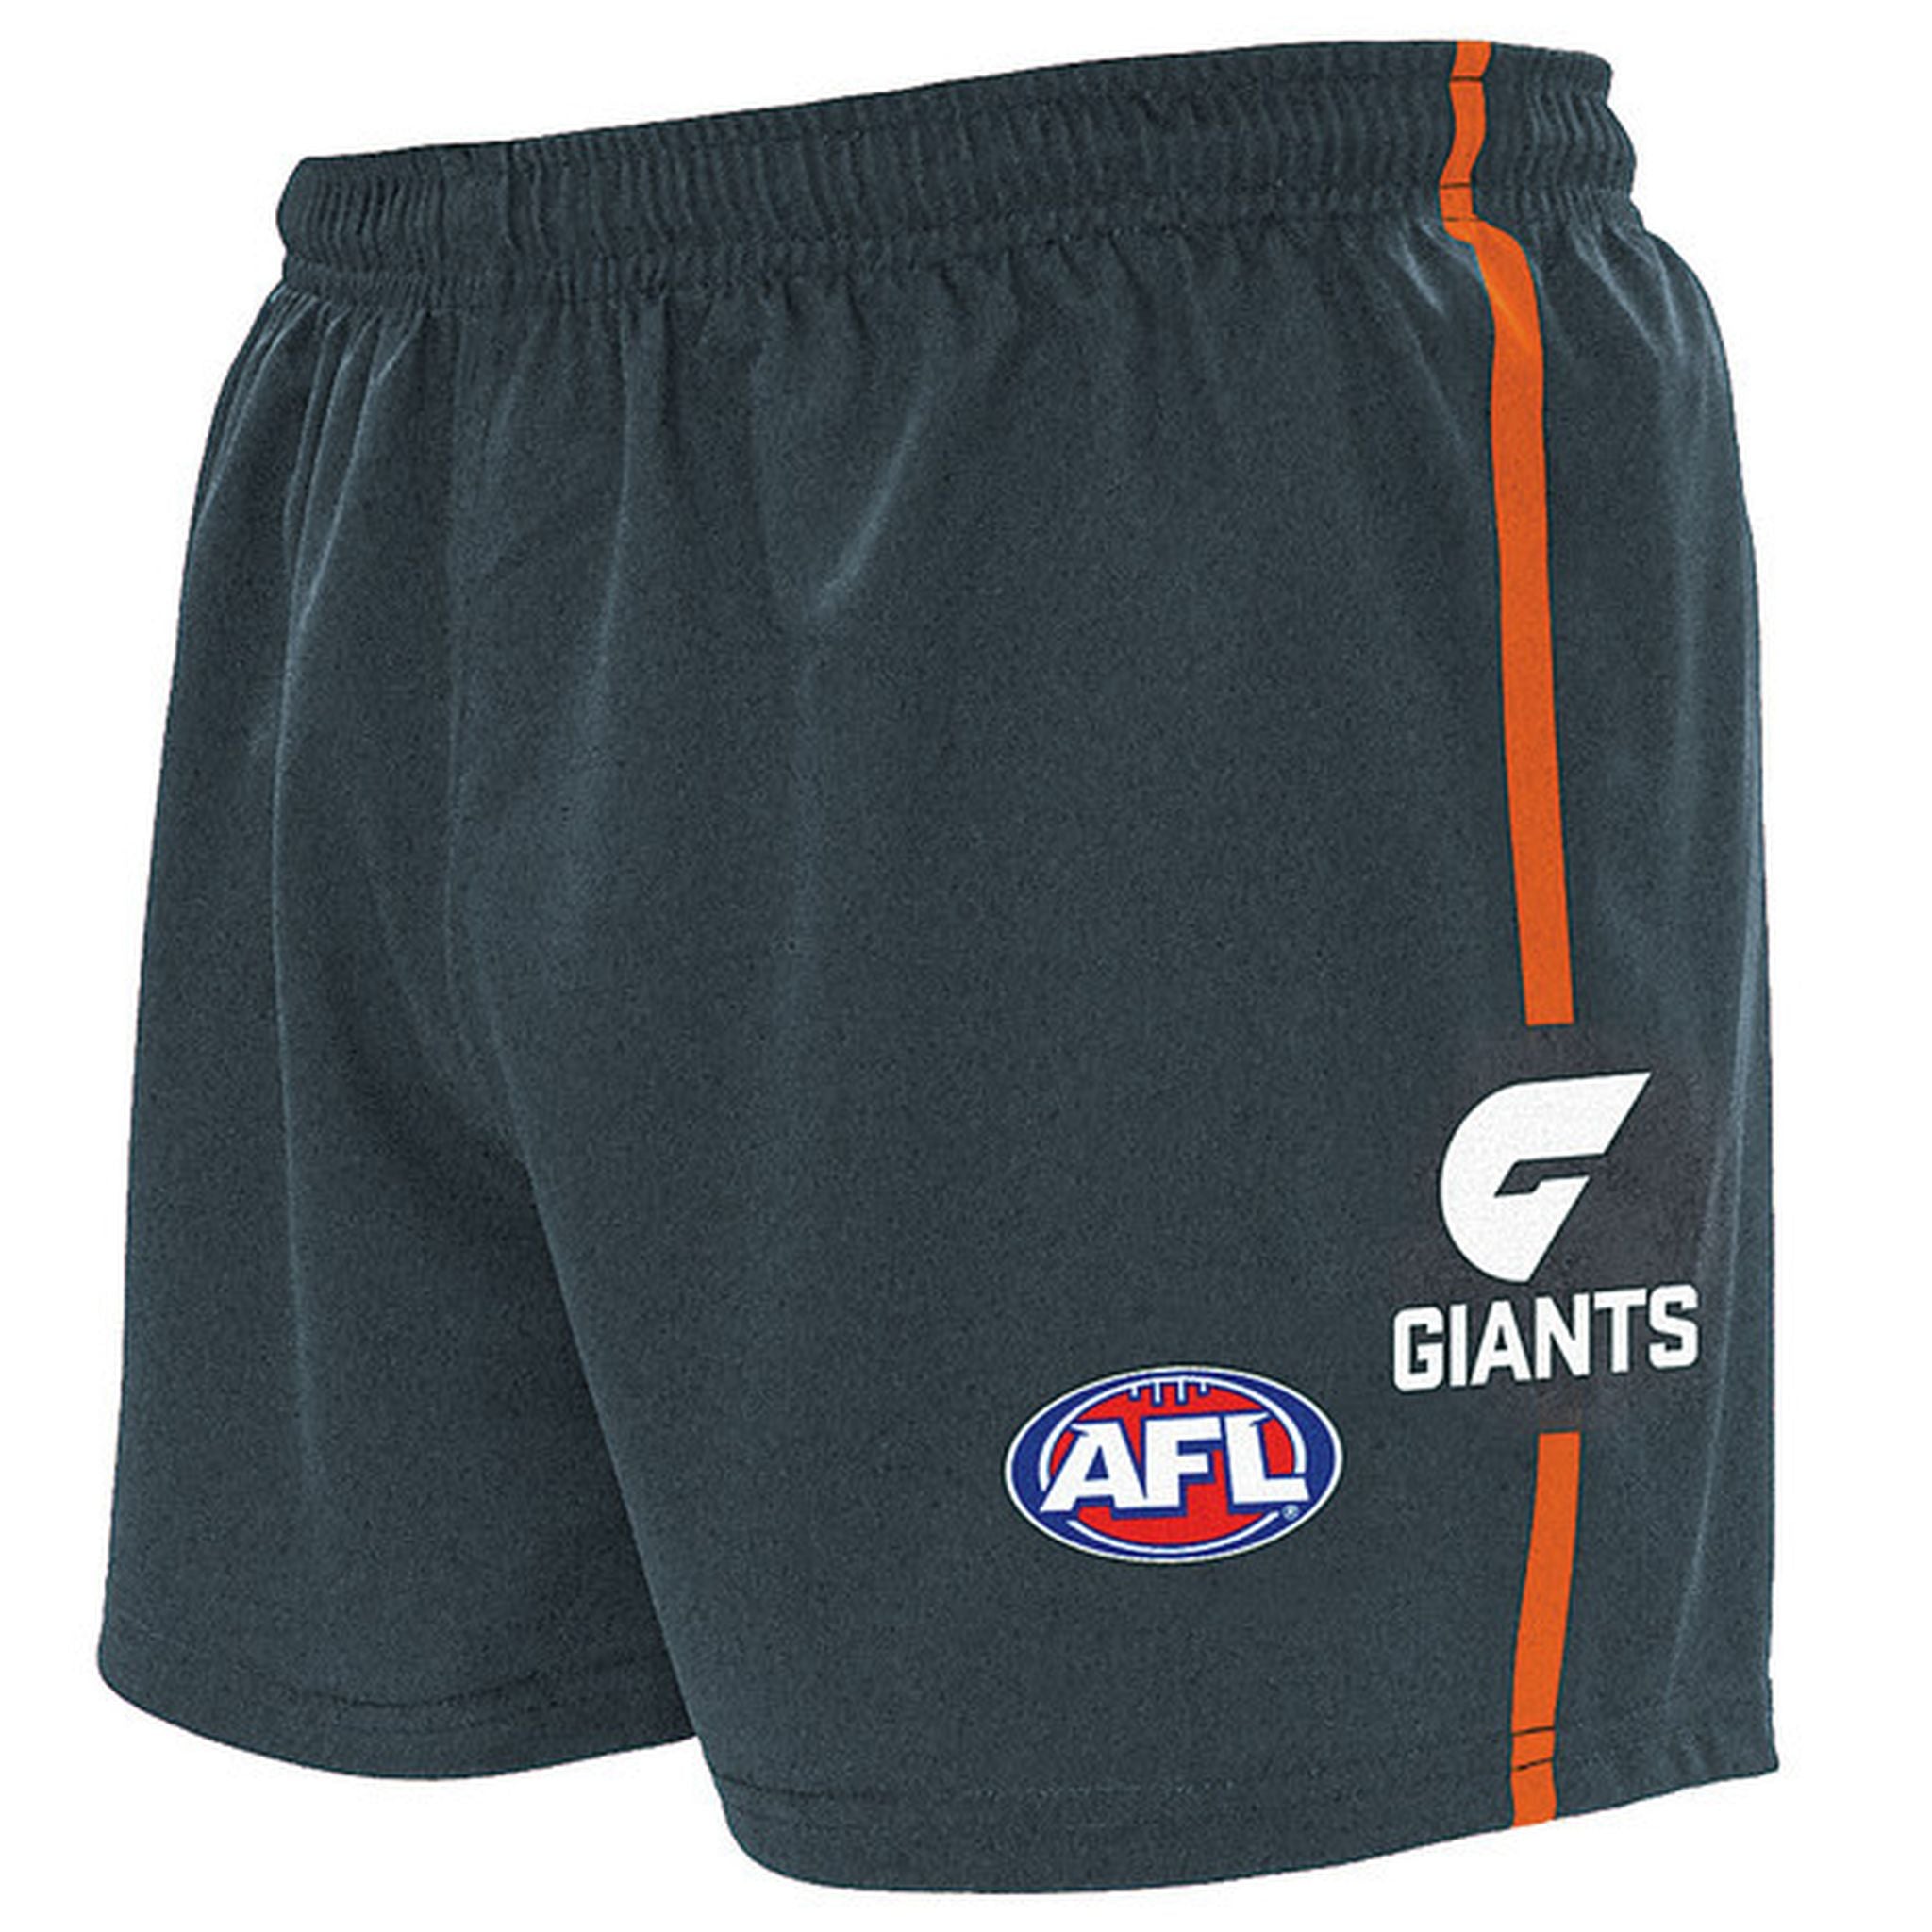 Burley GWS Giants AFL Replica Kids Shorts